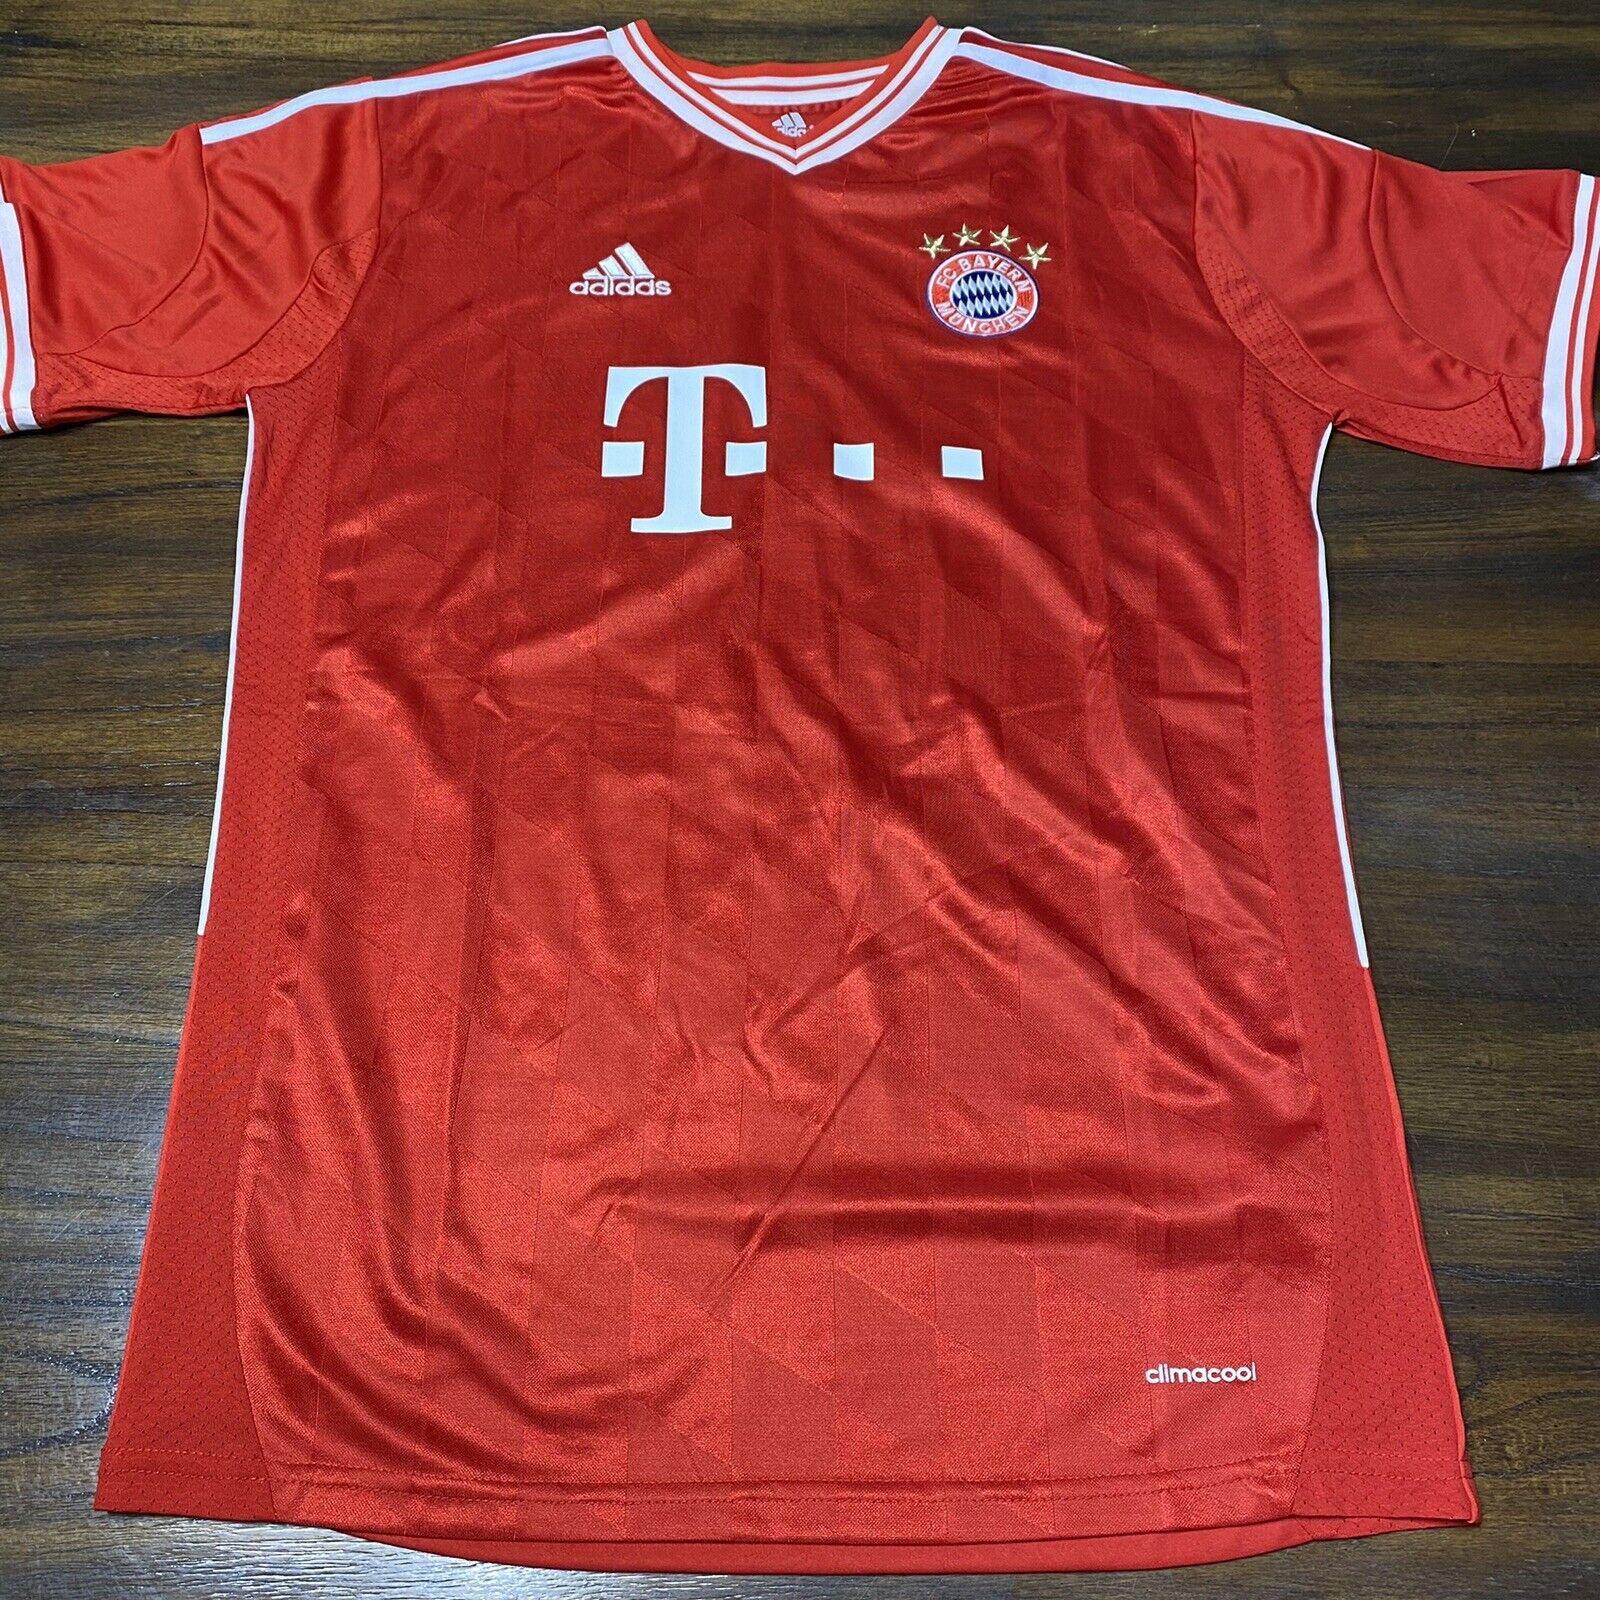 rib mild complexiteit Adidas BAYERN MUNCHEN SHIRT jersey #19 Mario GOTZE kit red size XL NEW |  eBay